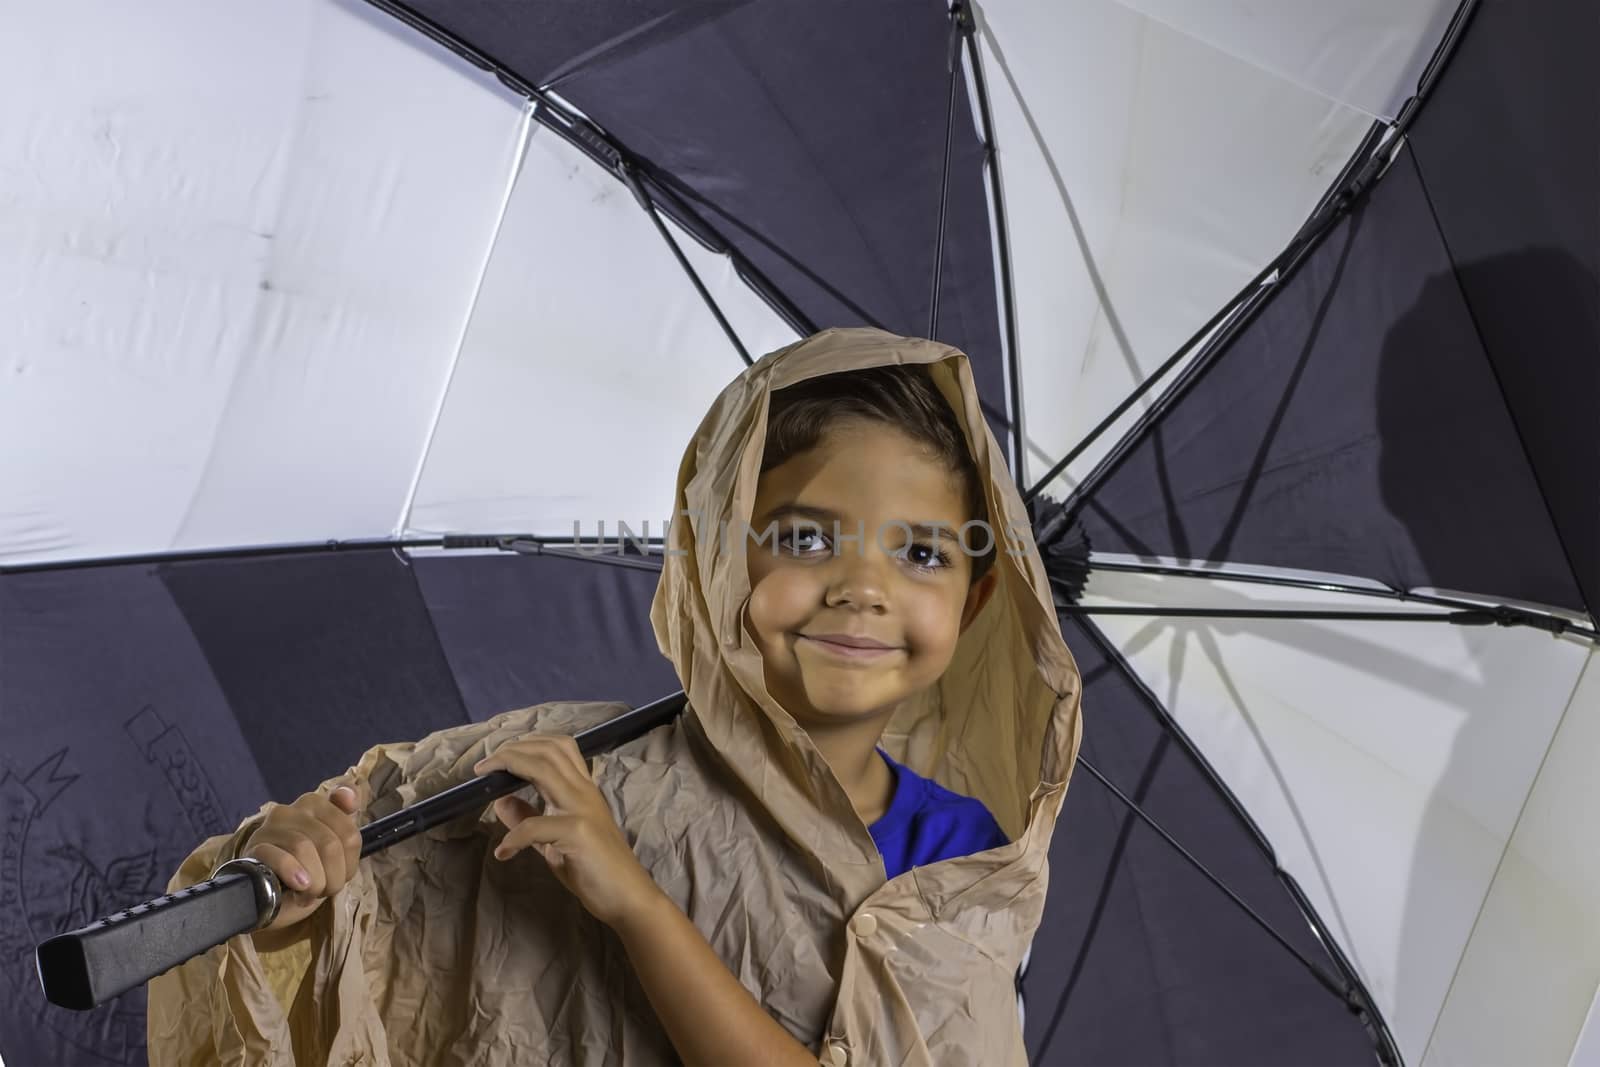 Child Umbrella by schubphoto